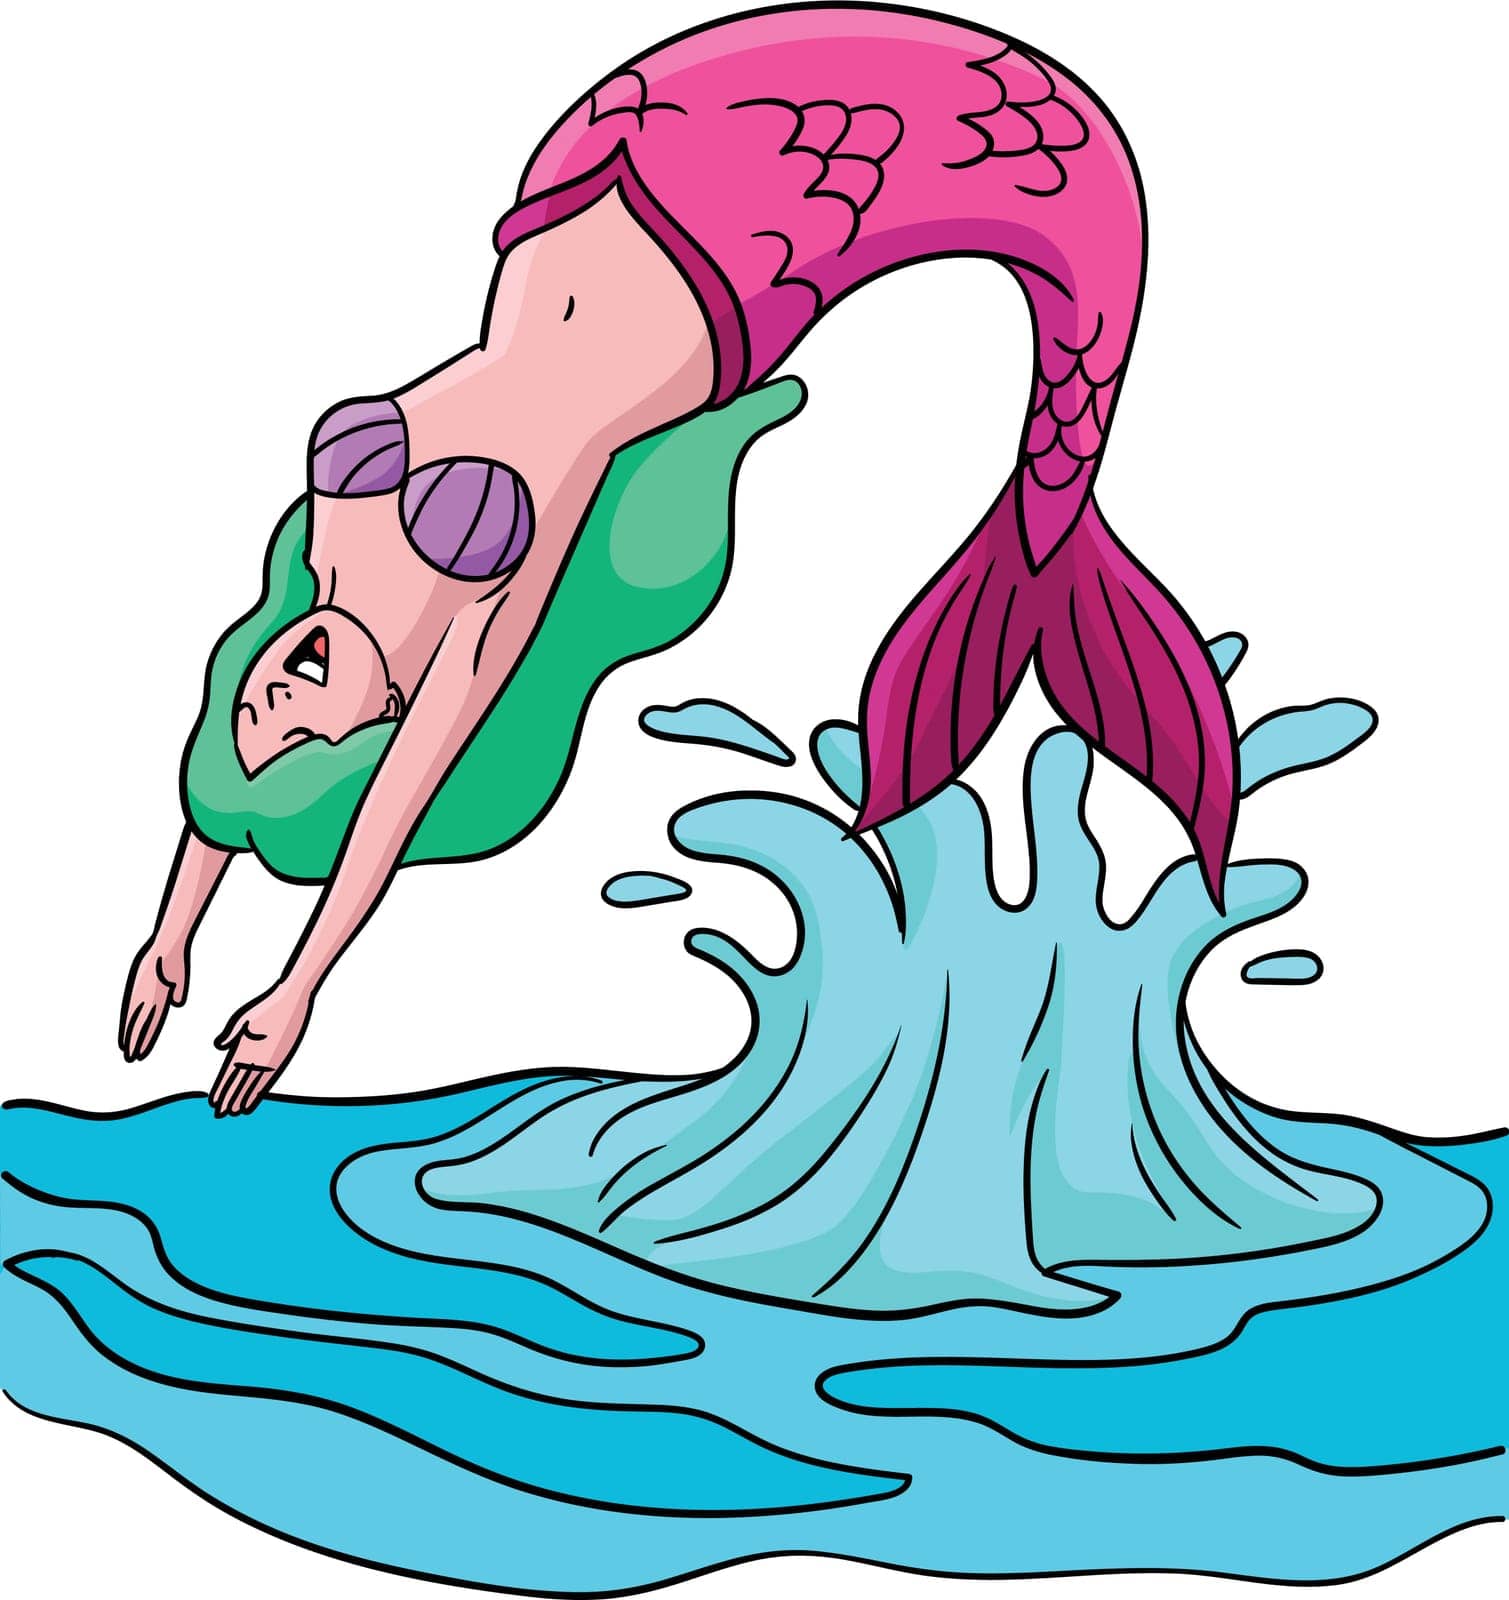 This cartoon clipart shows a Mermaid Backflip illustration.